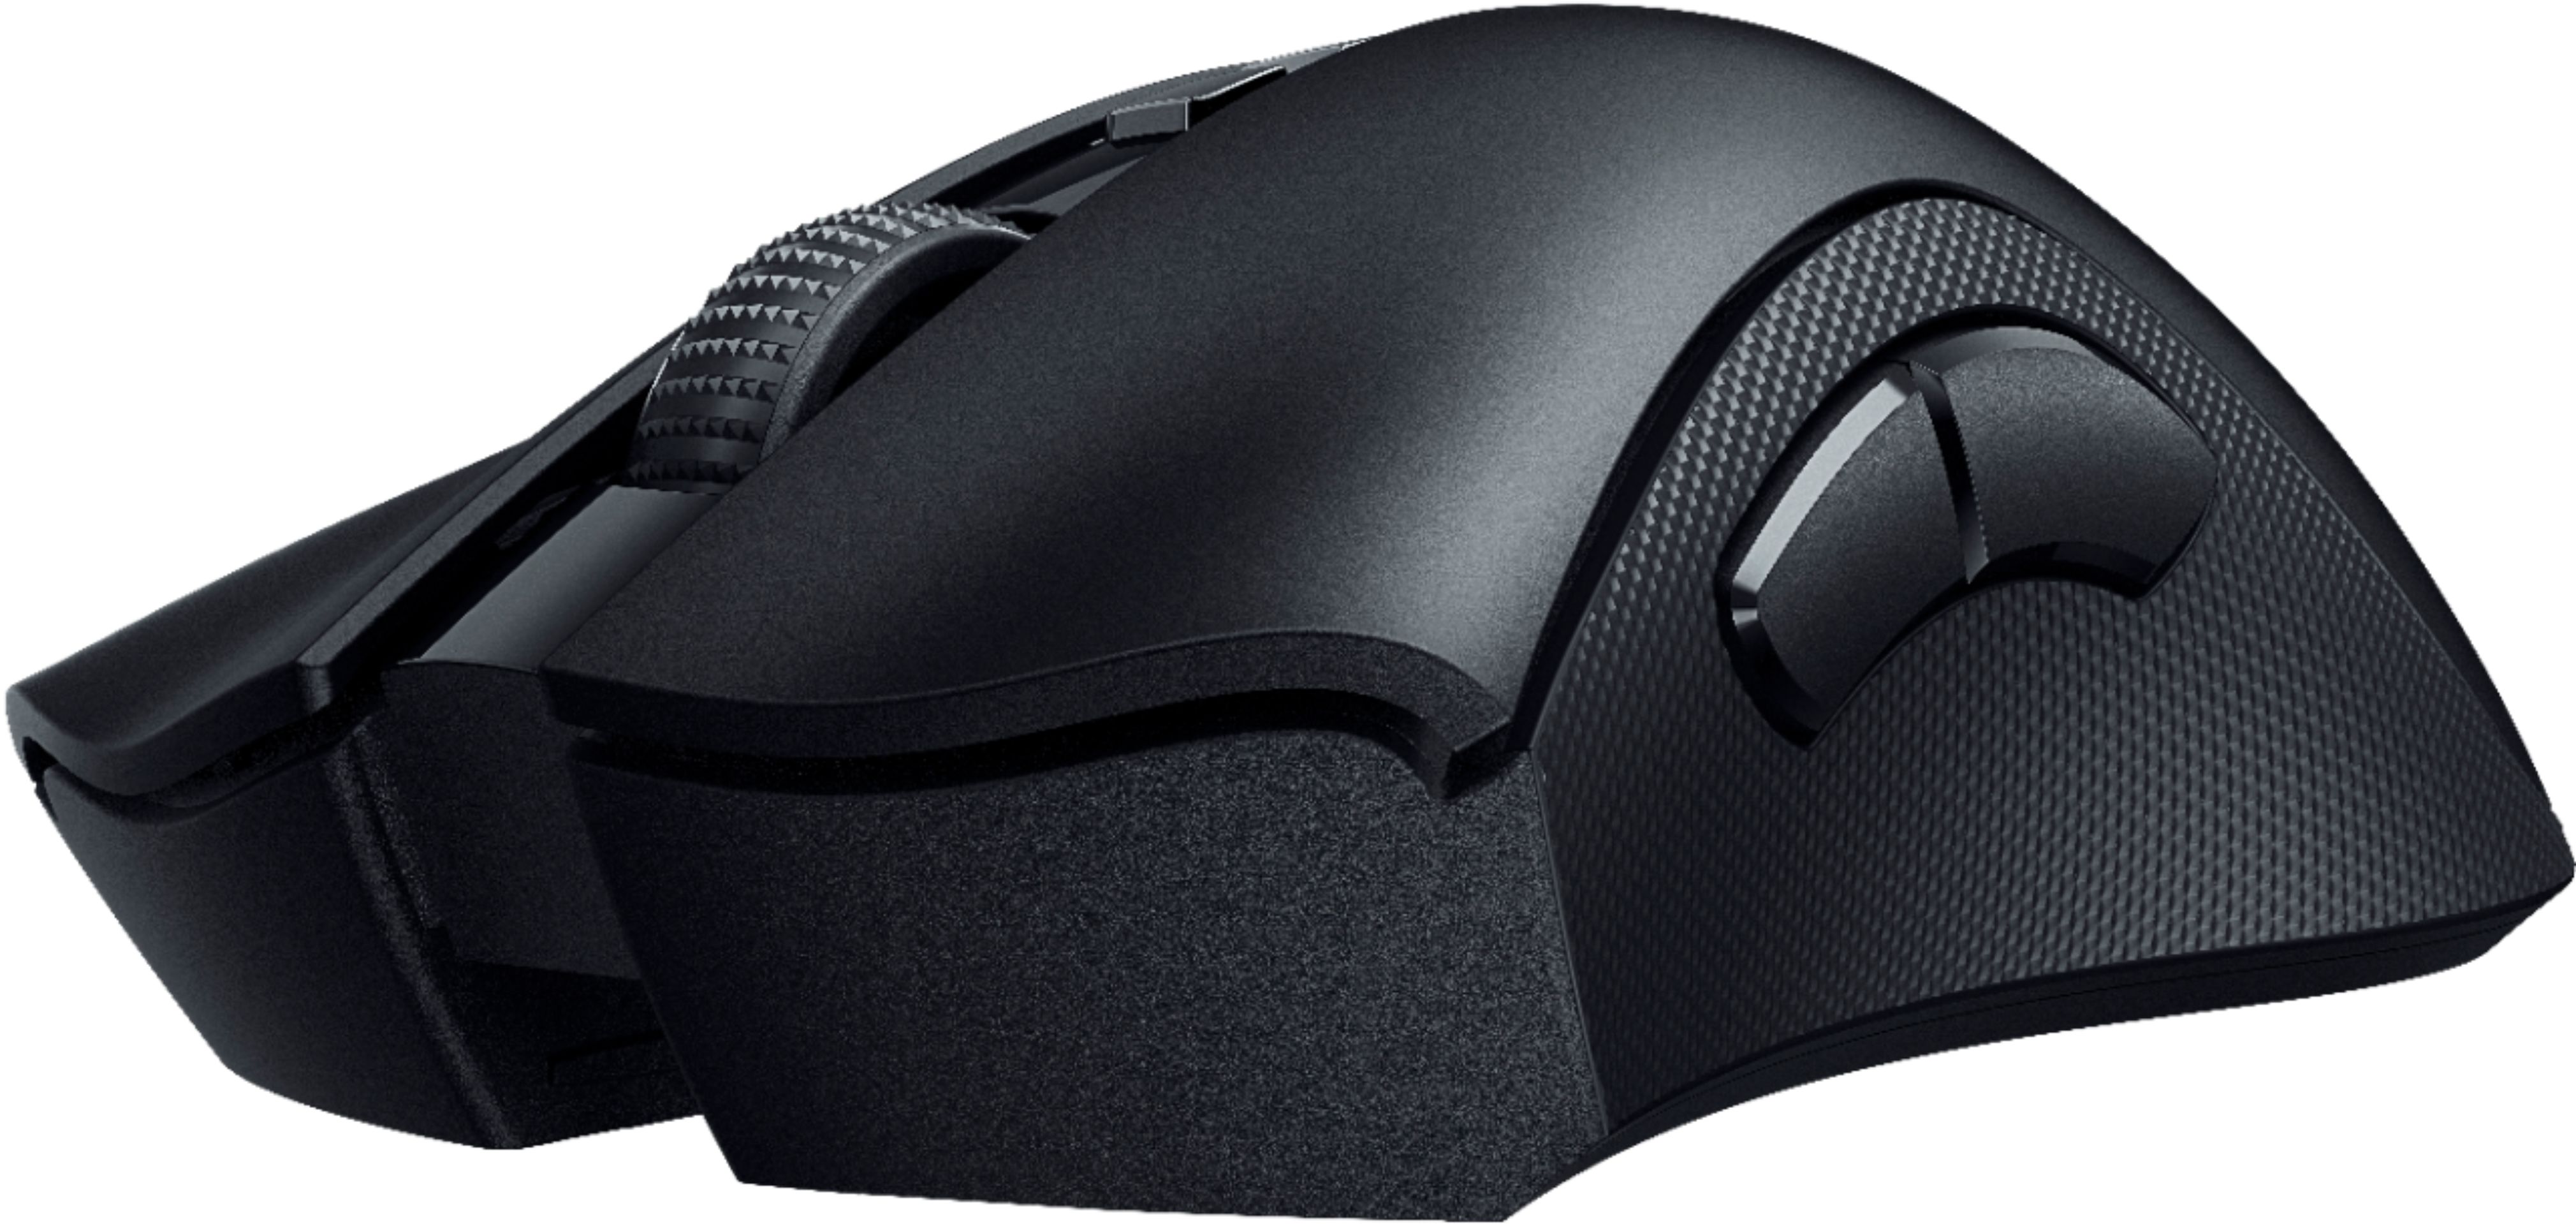 Brand New Razer DeathAdder V2 Pro Wireless Gaming Mouse - Black | eBay